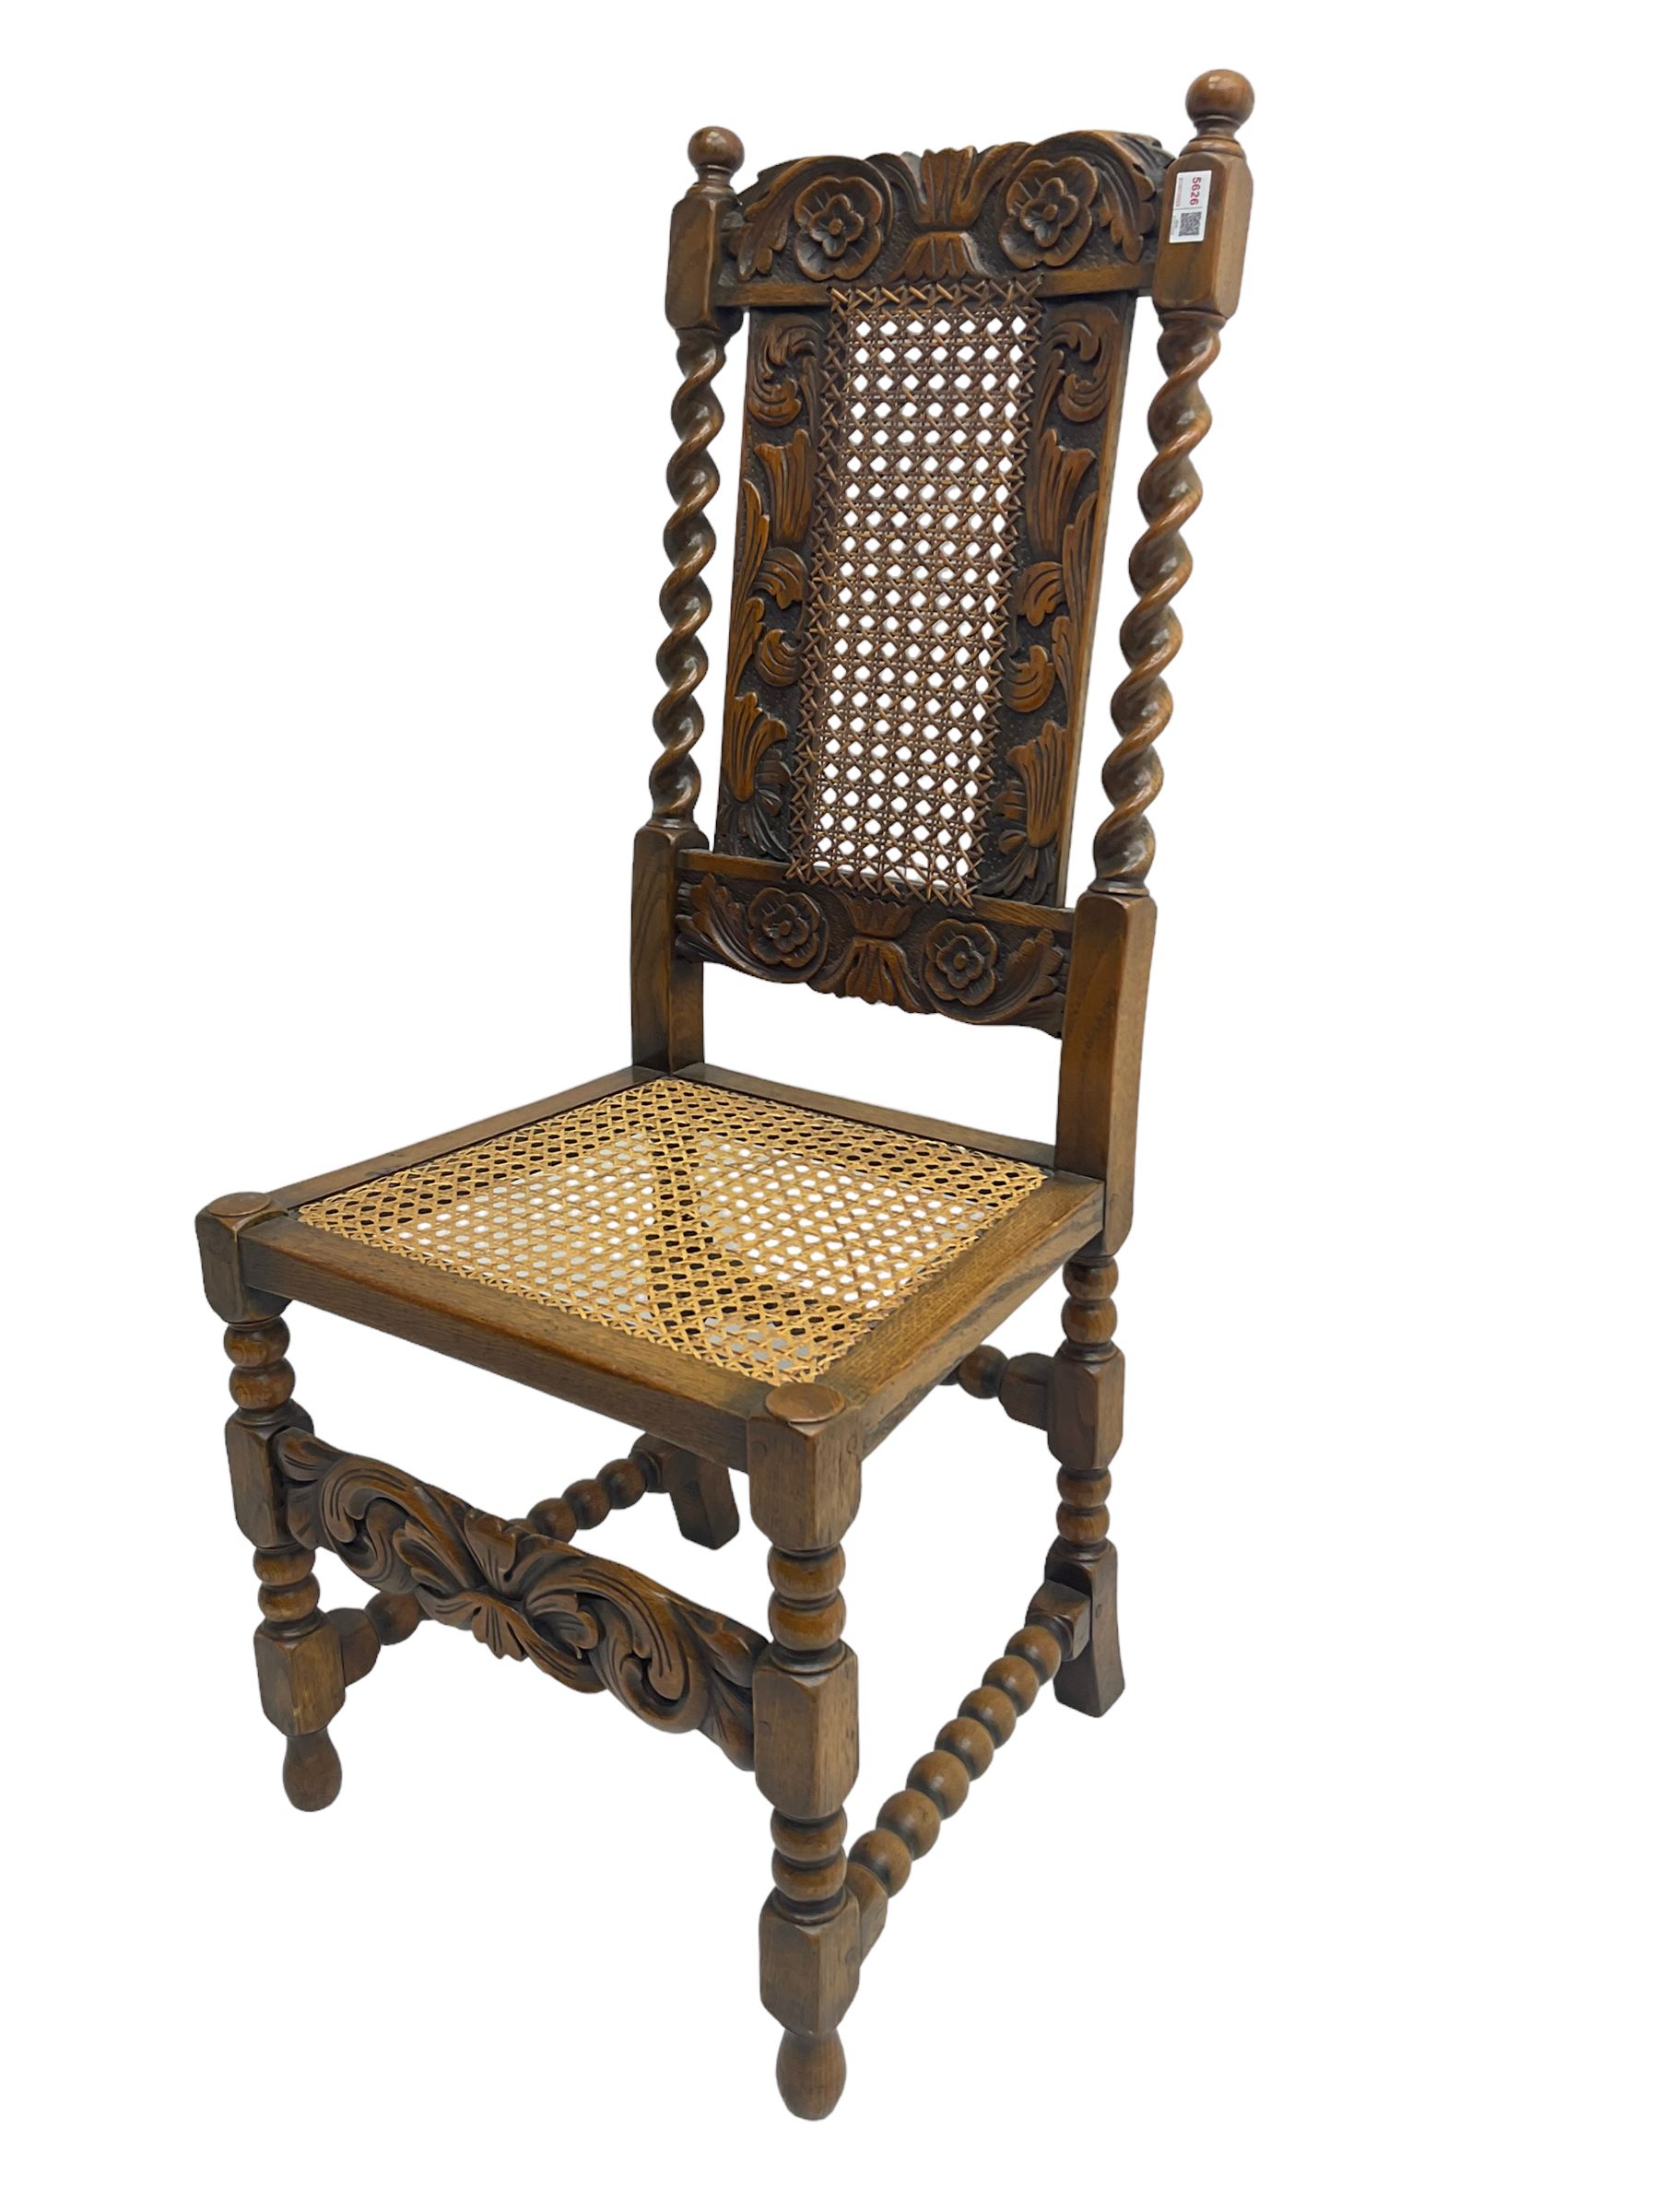 Carolean design oak side chair - Image 2 of 2